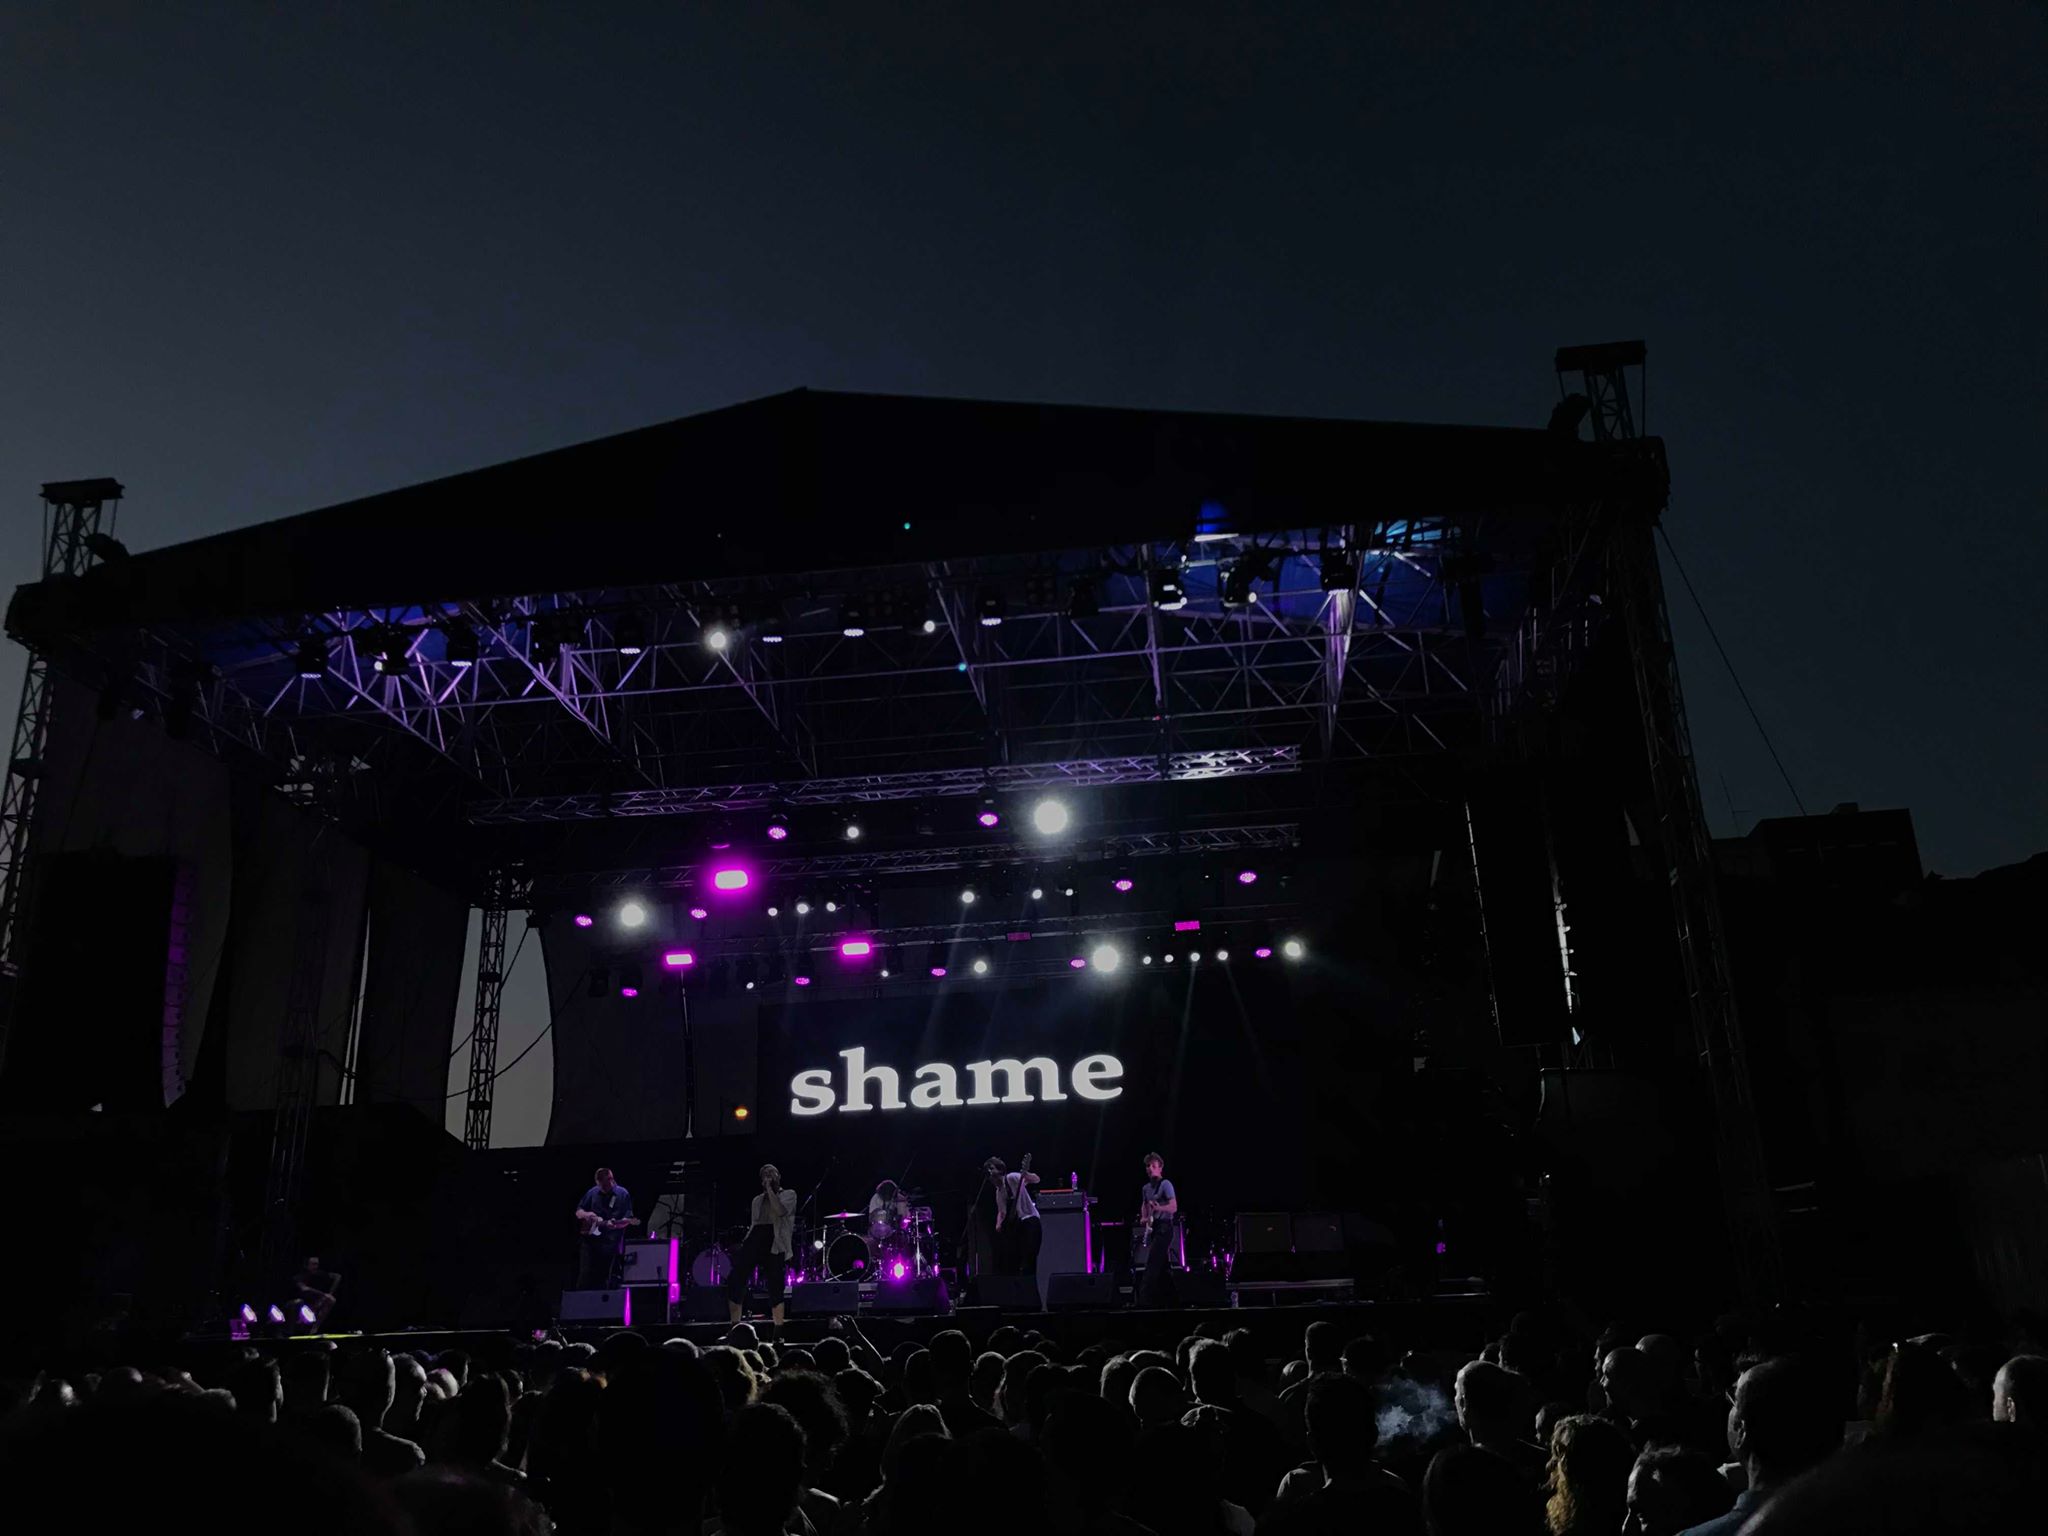 James και Shame, Wild Front - Θεσσαλονίκη 2019